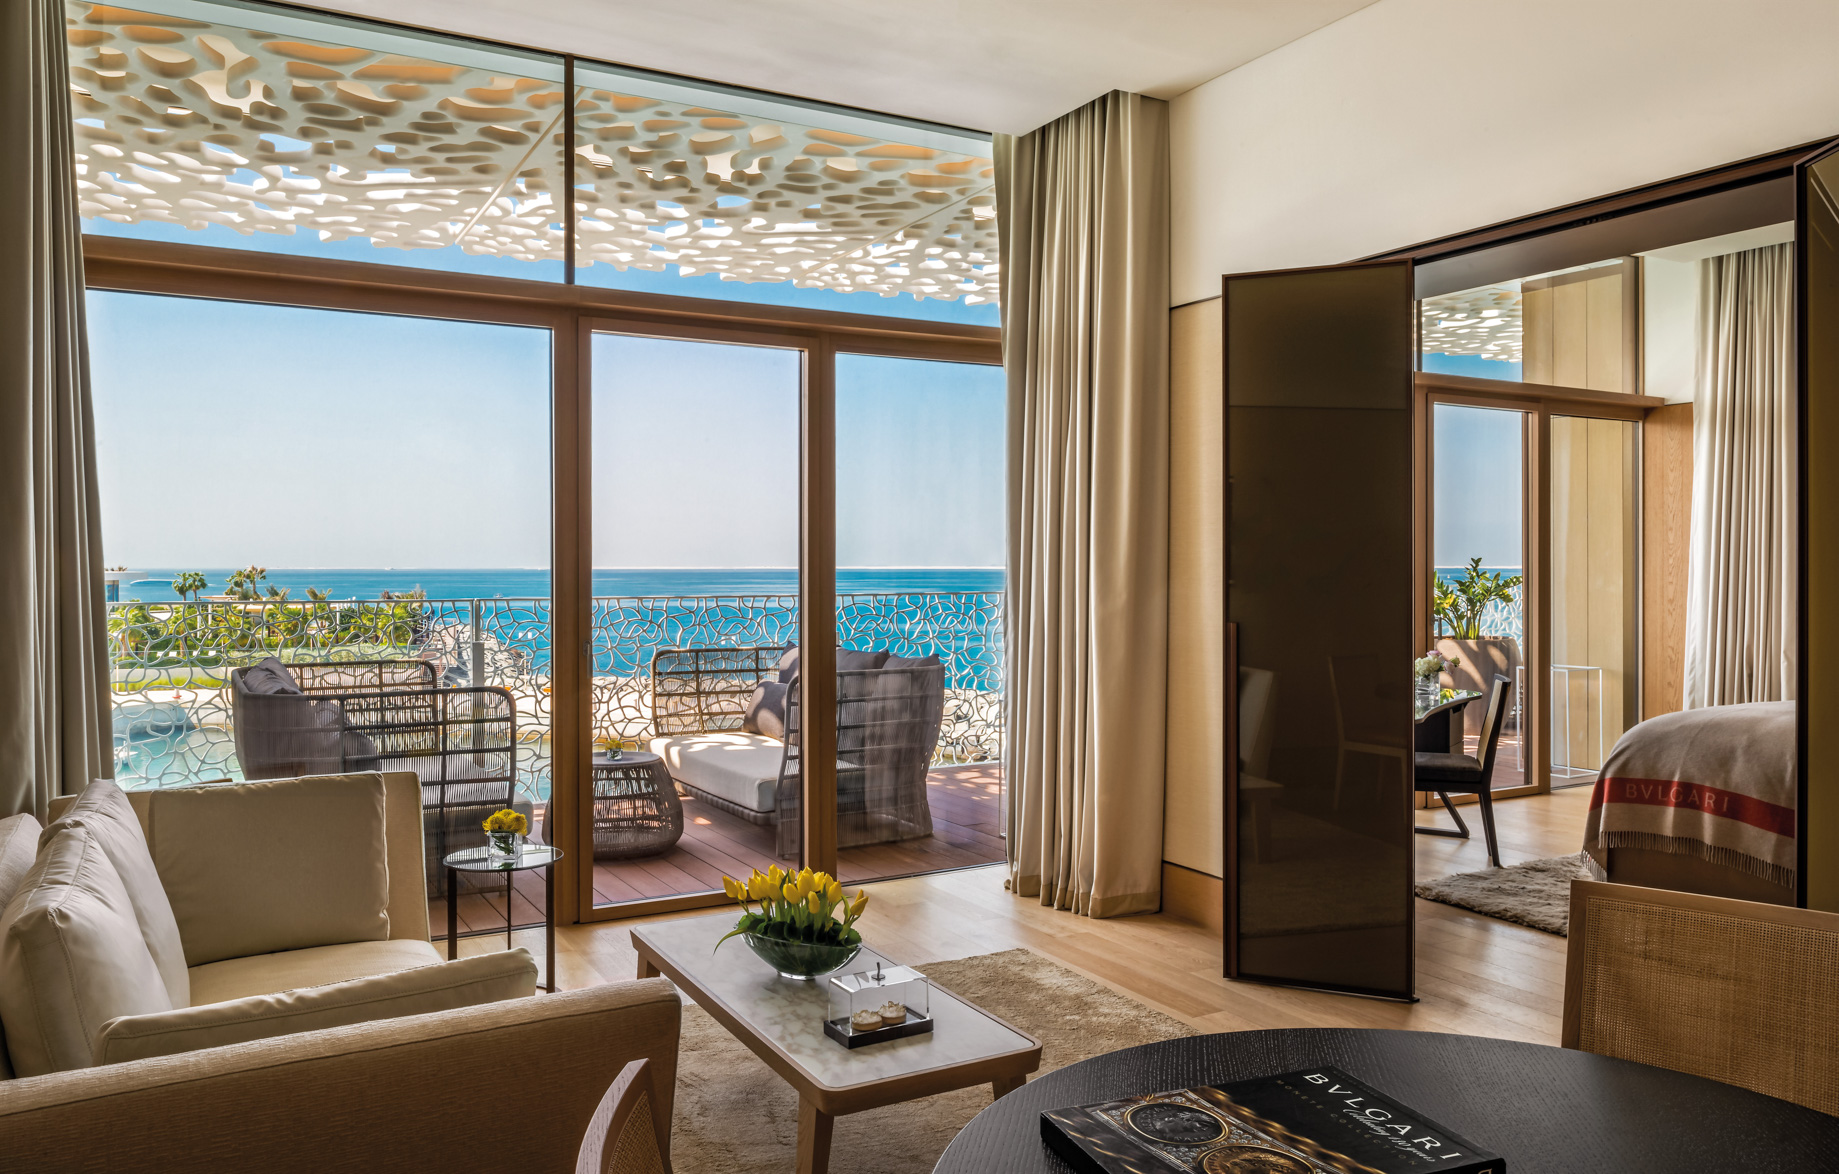 Bvlgari Resort Dubai – Jumeira Bay Island, Dubai, UAE – Guest Suite Living Room and Bedroom